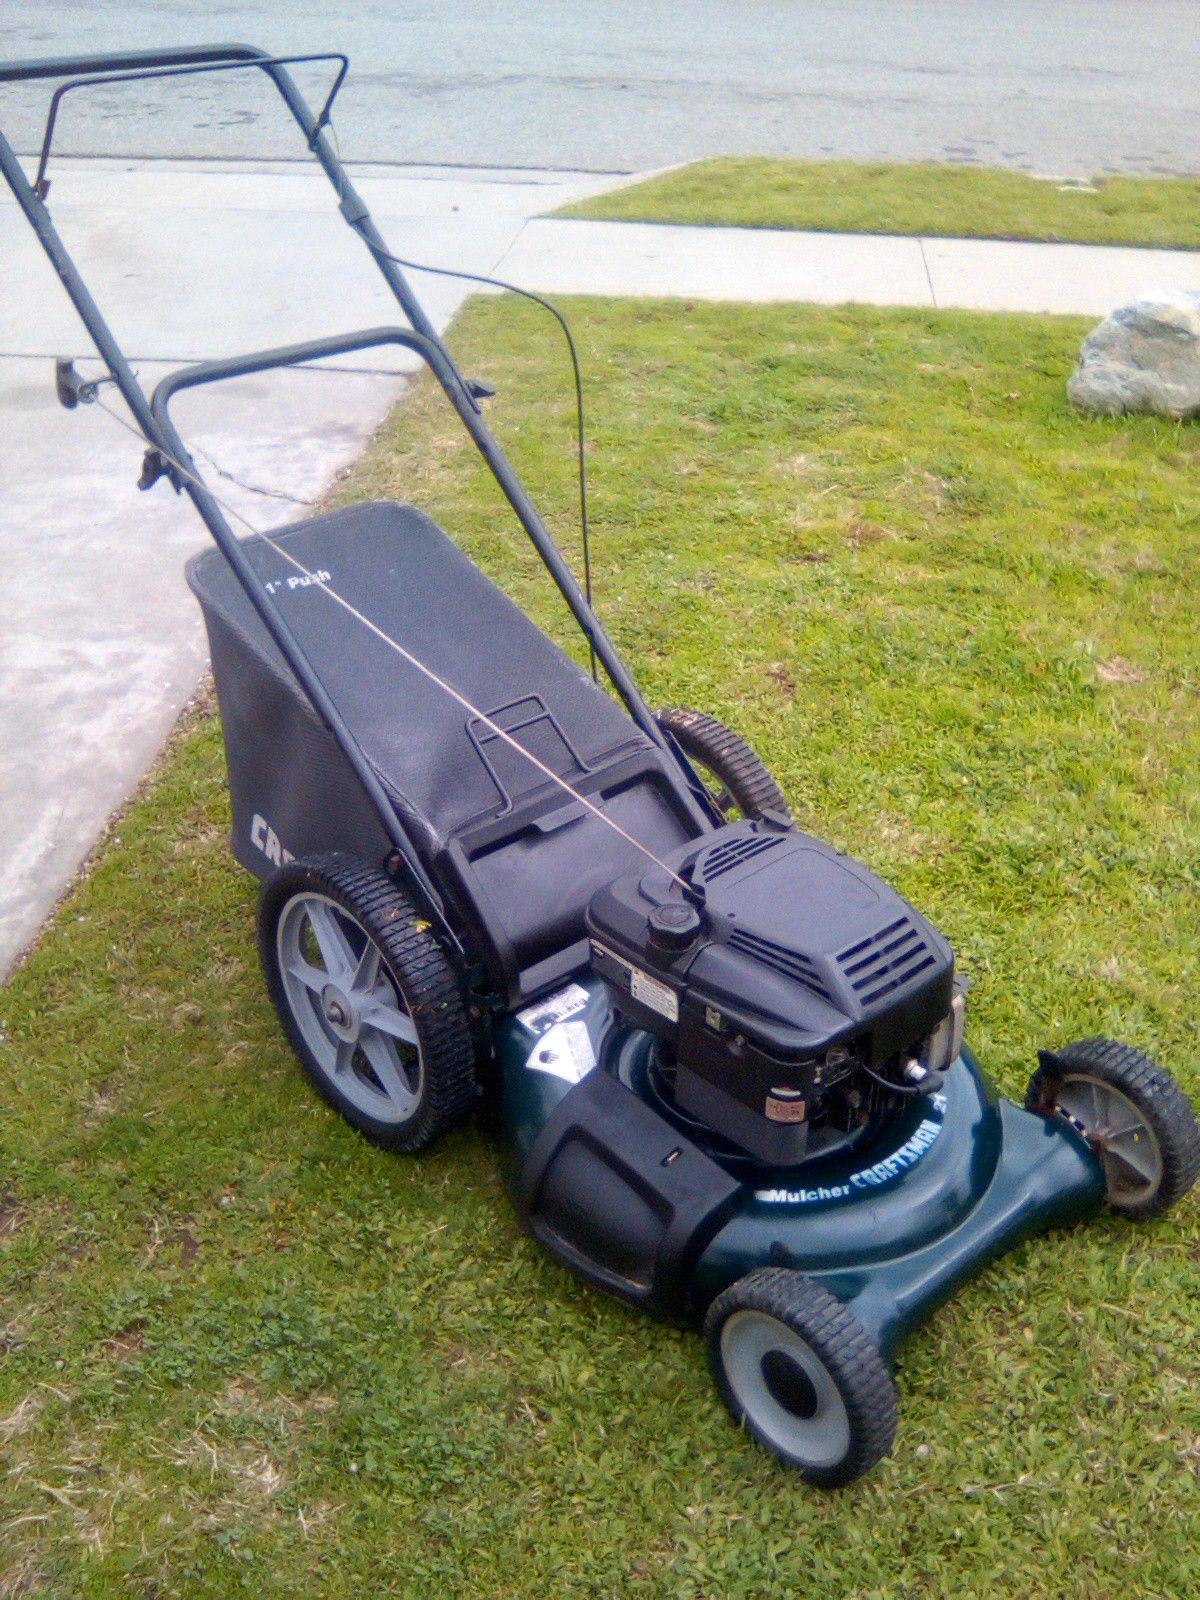 21in Craftsman 6.5 HP push lawn mower $100